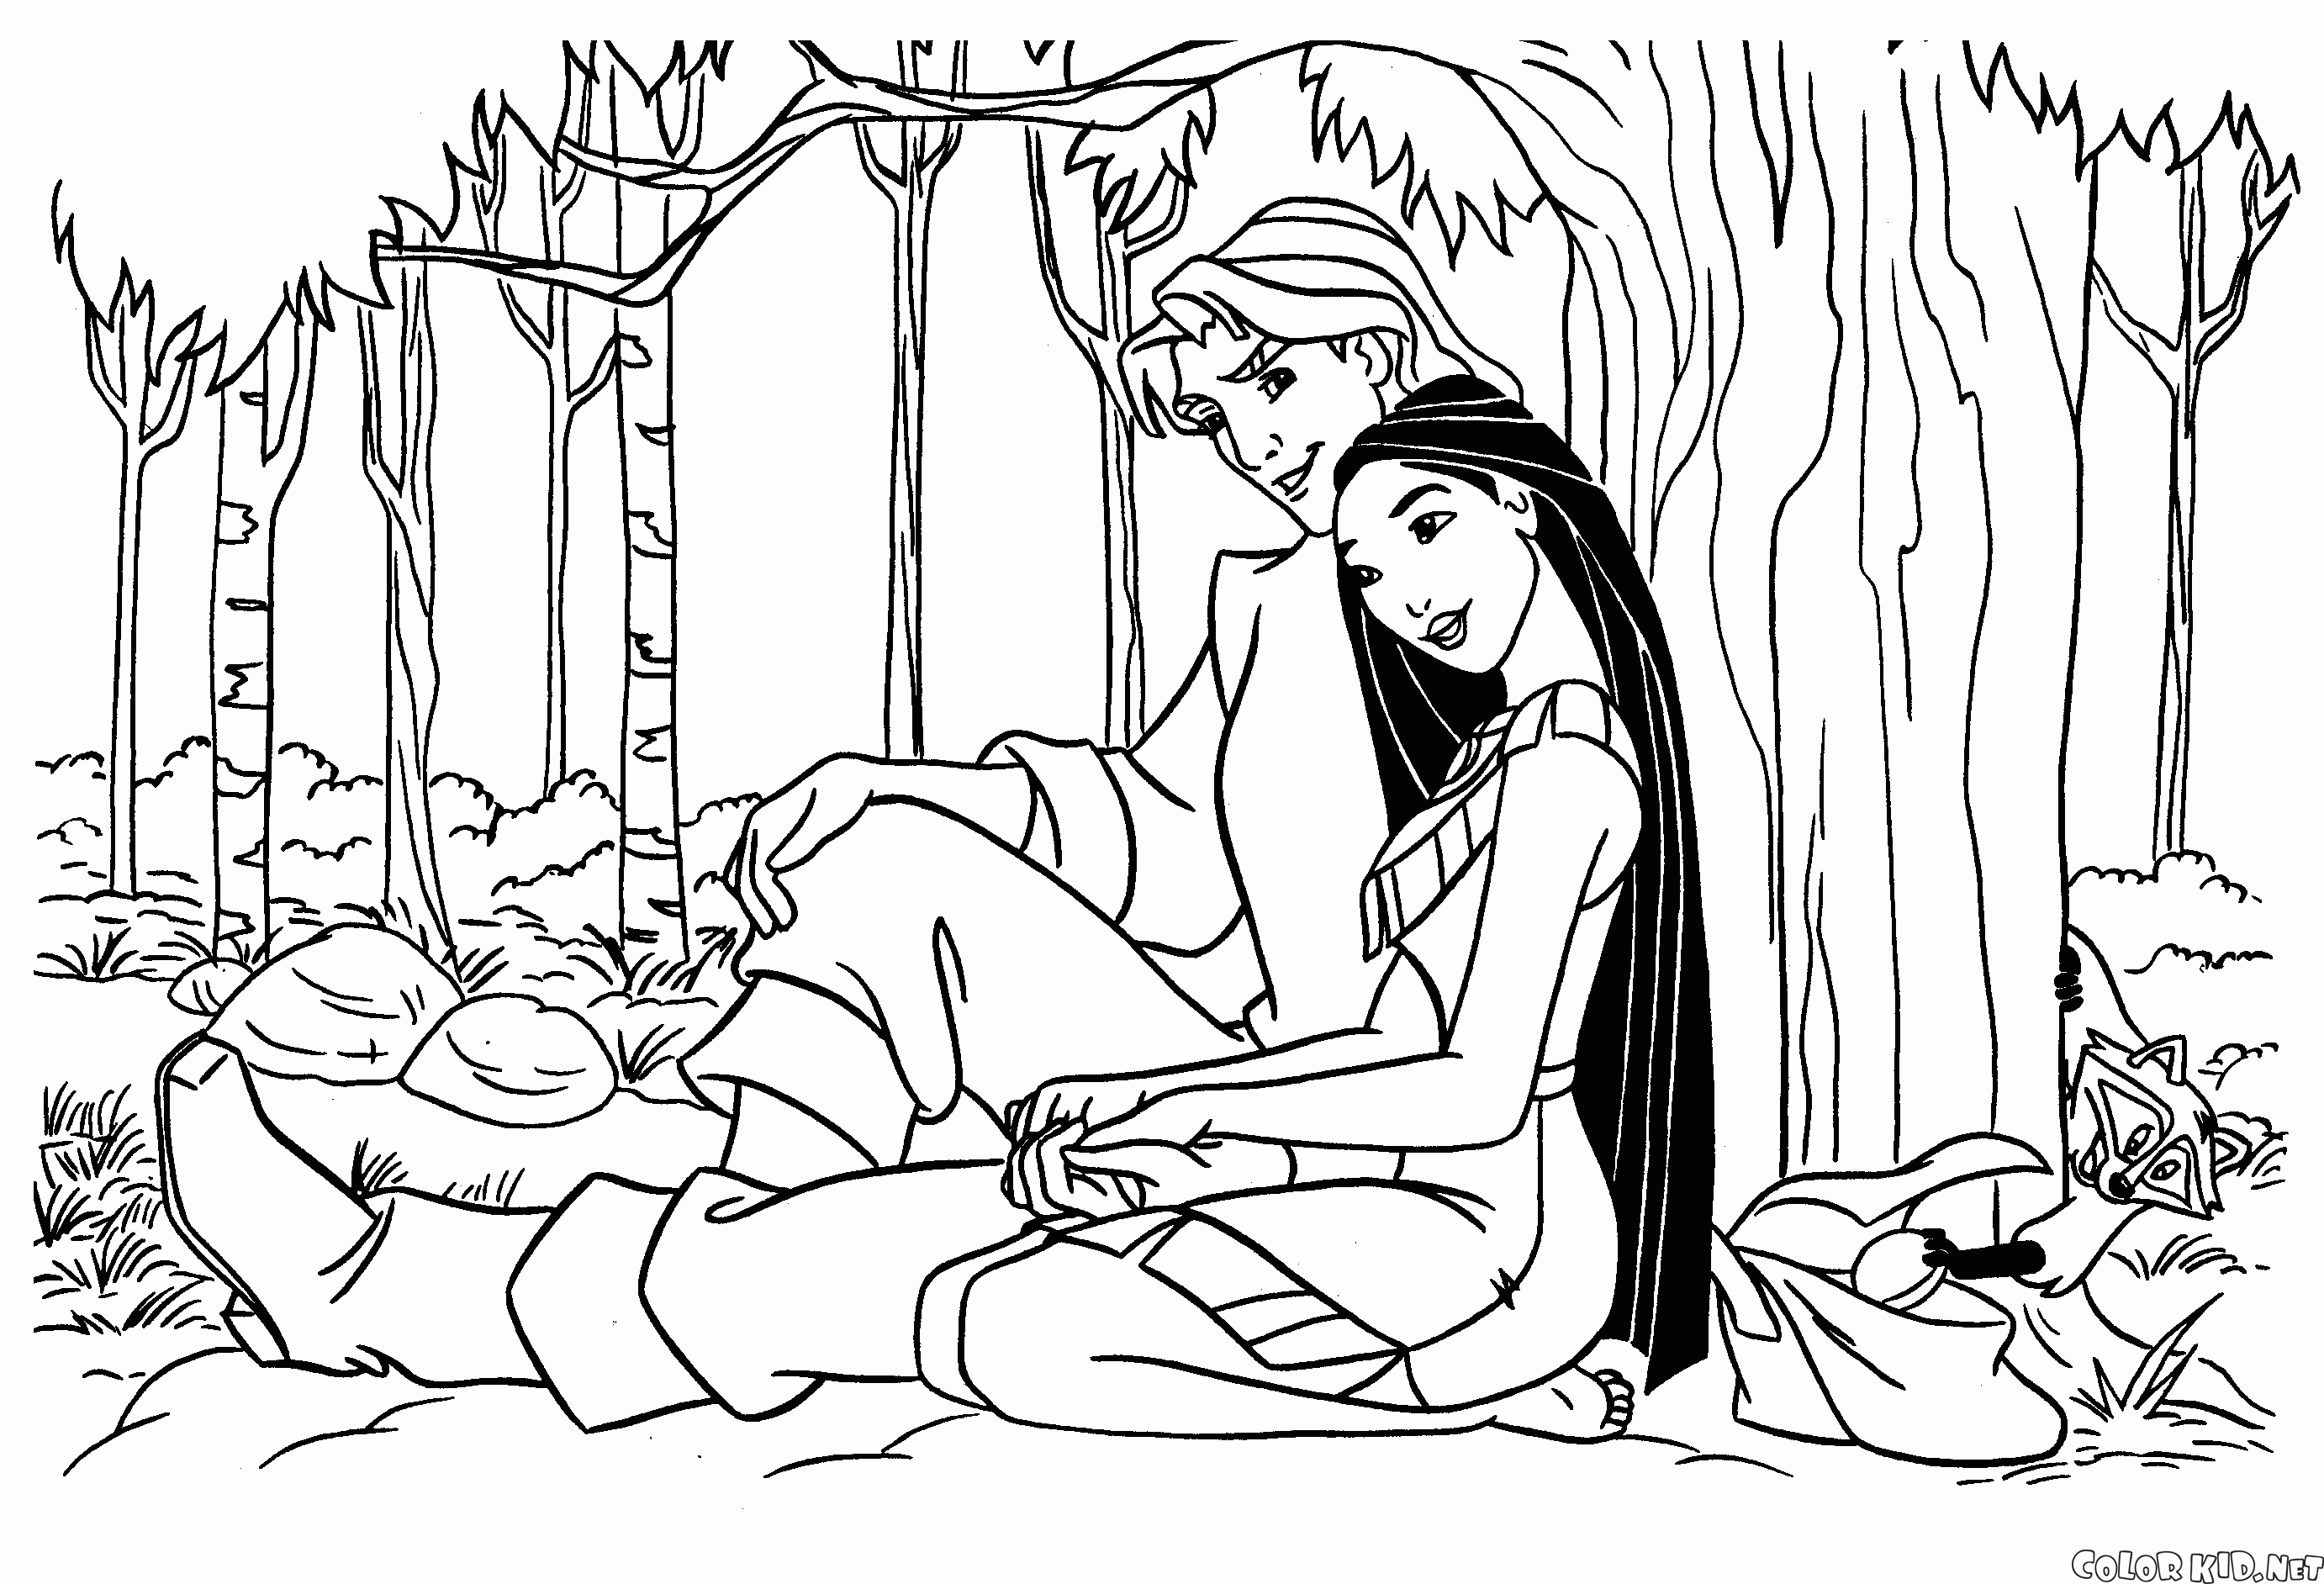 John und Pocahontas